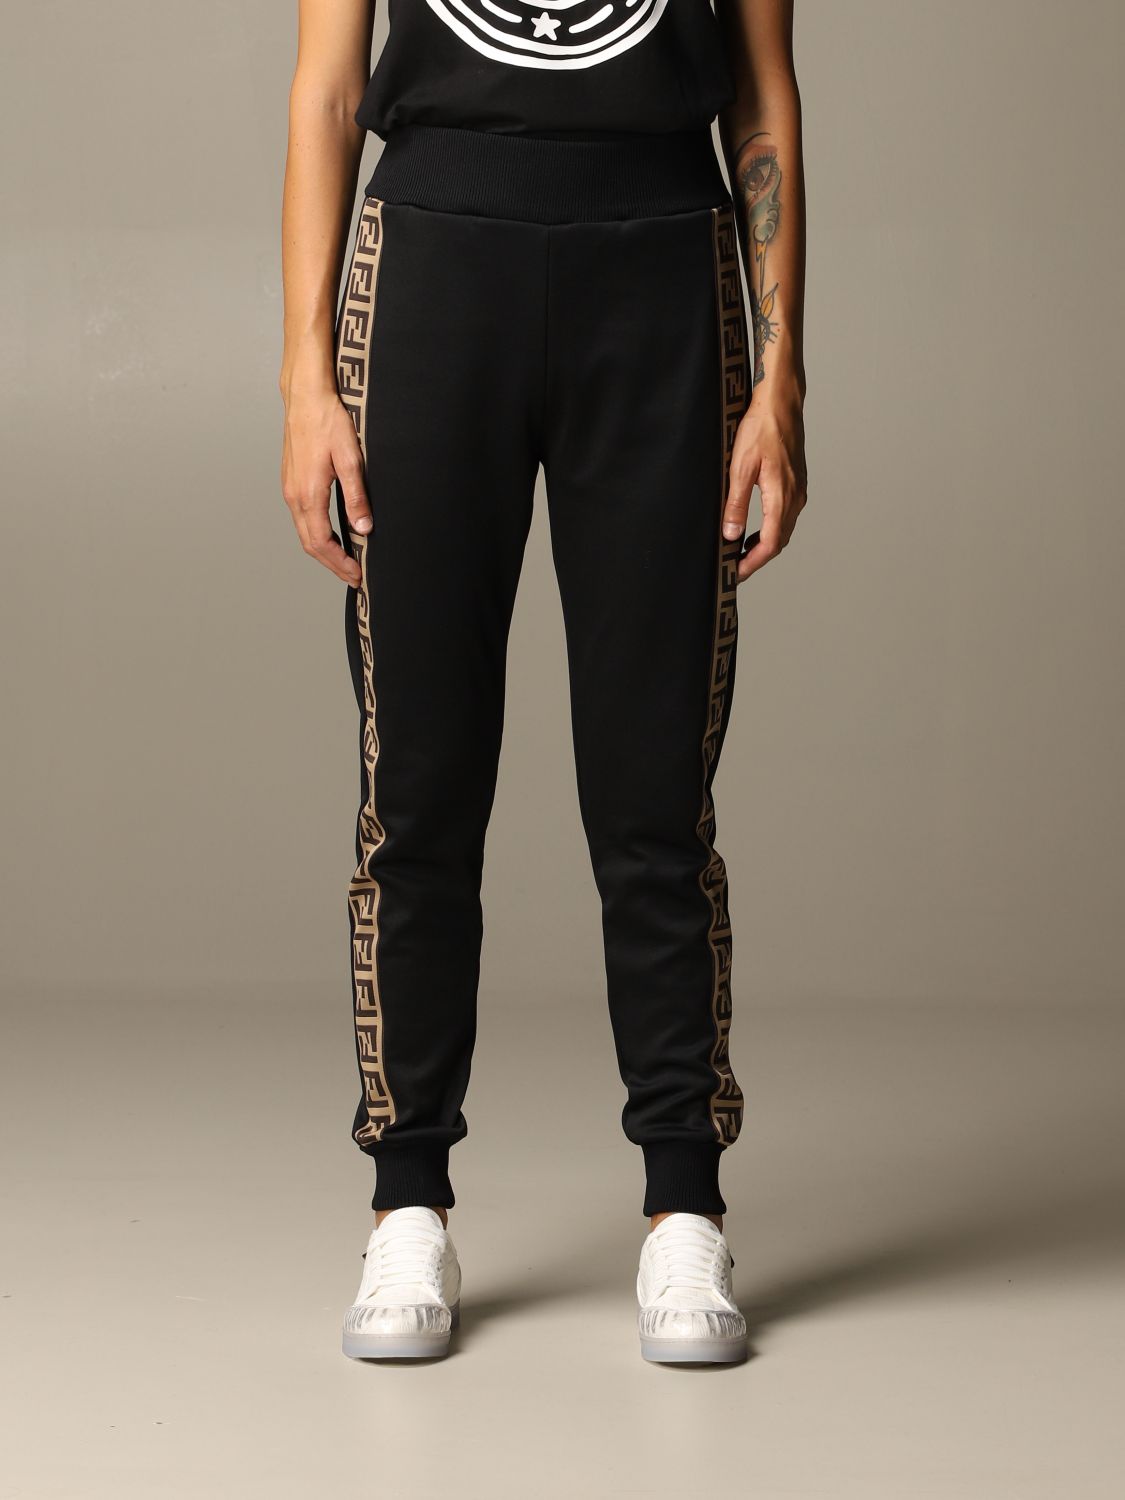 FENDI: jogging trousers in acetate with FF bands - Black | Fendi pants ...